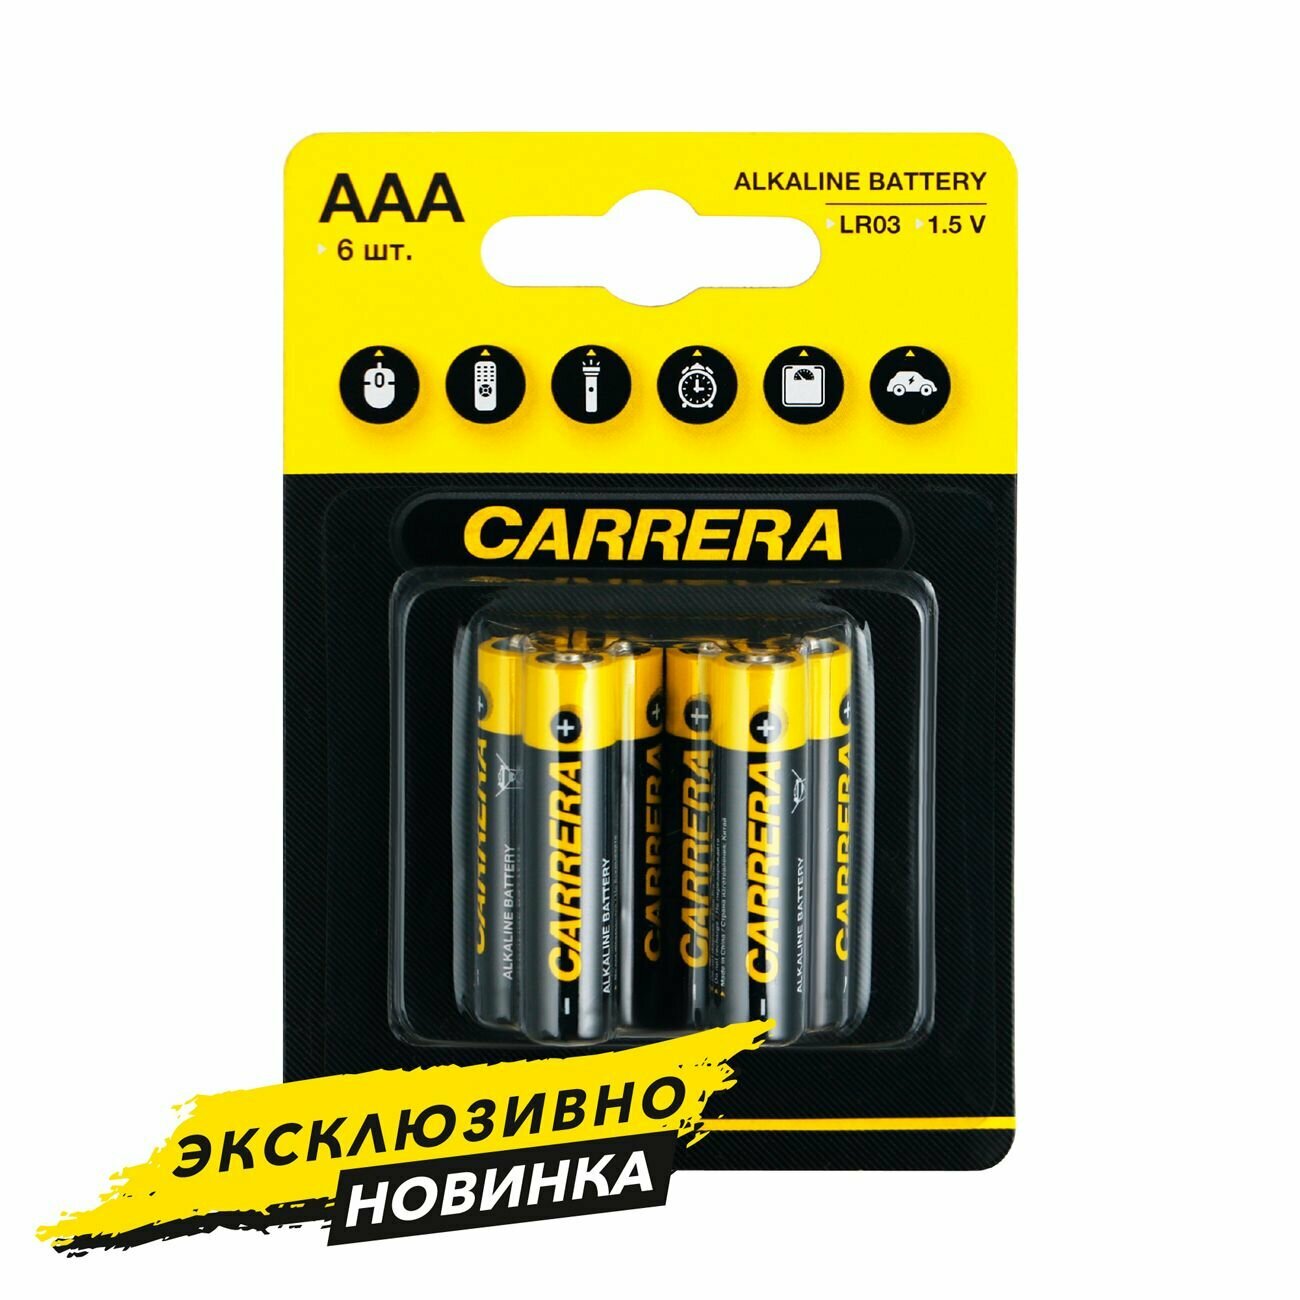 Батарейки Carrera №306